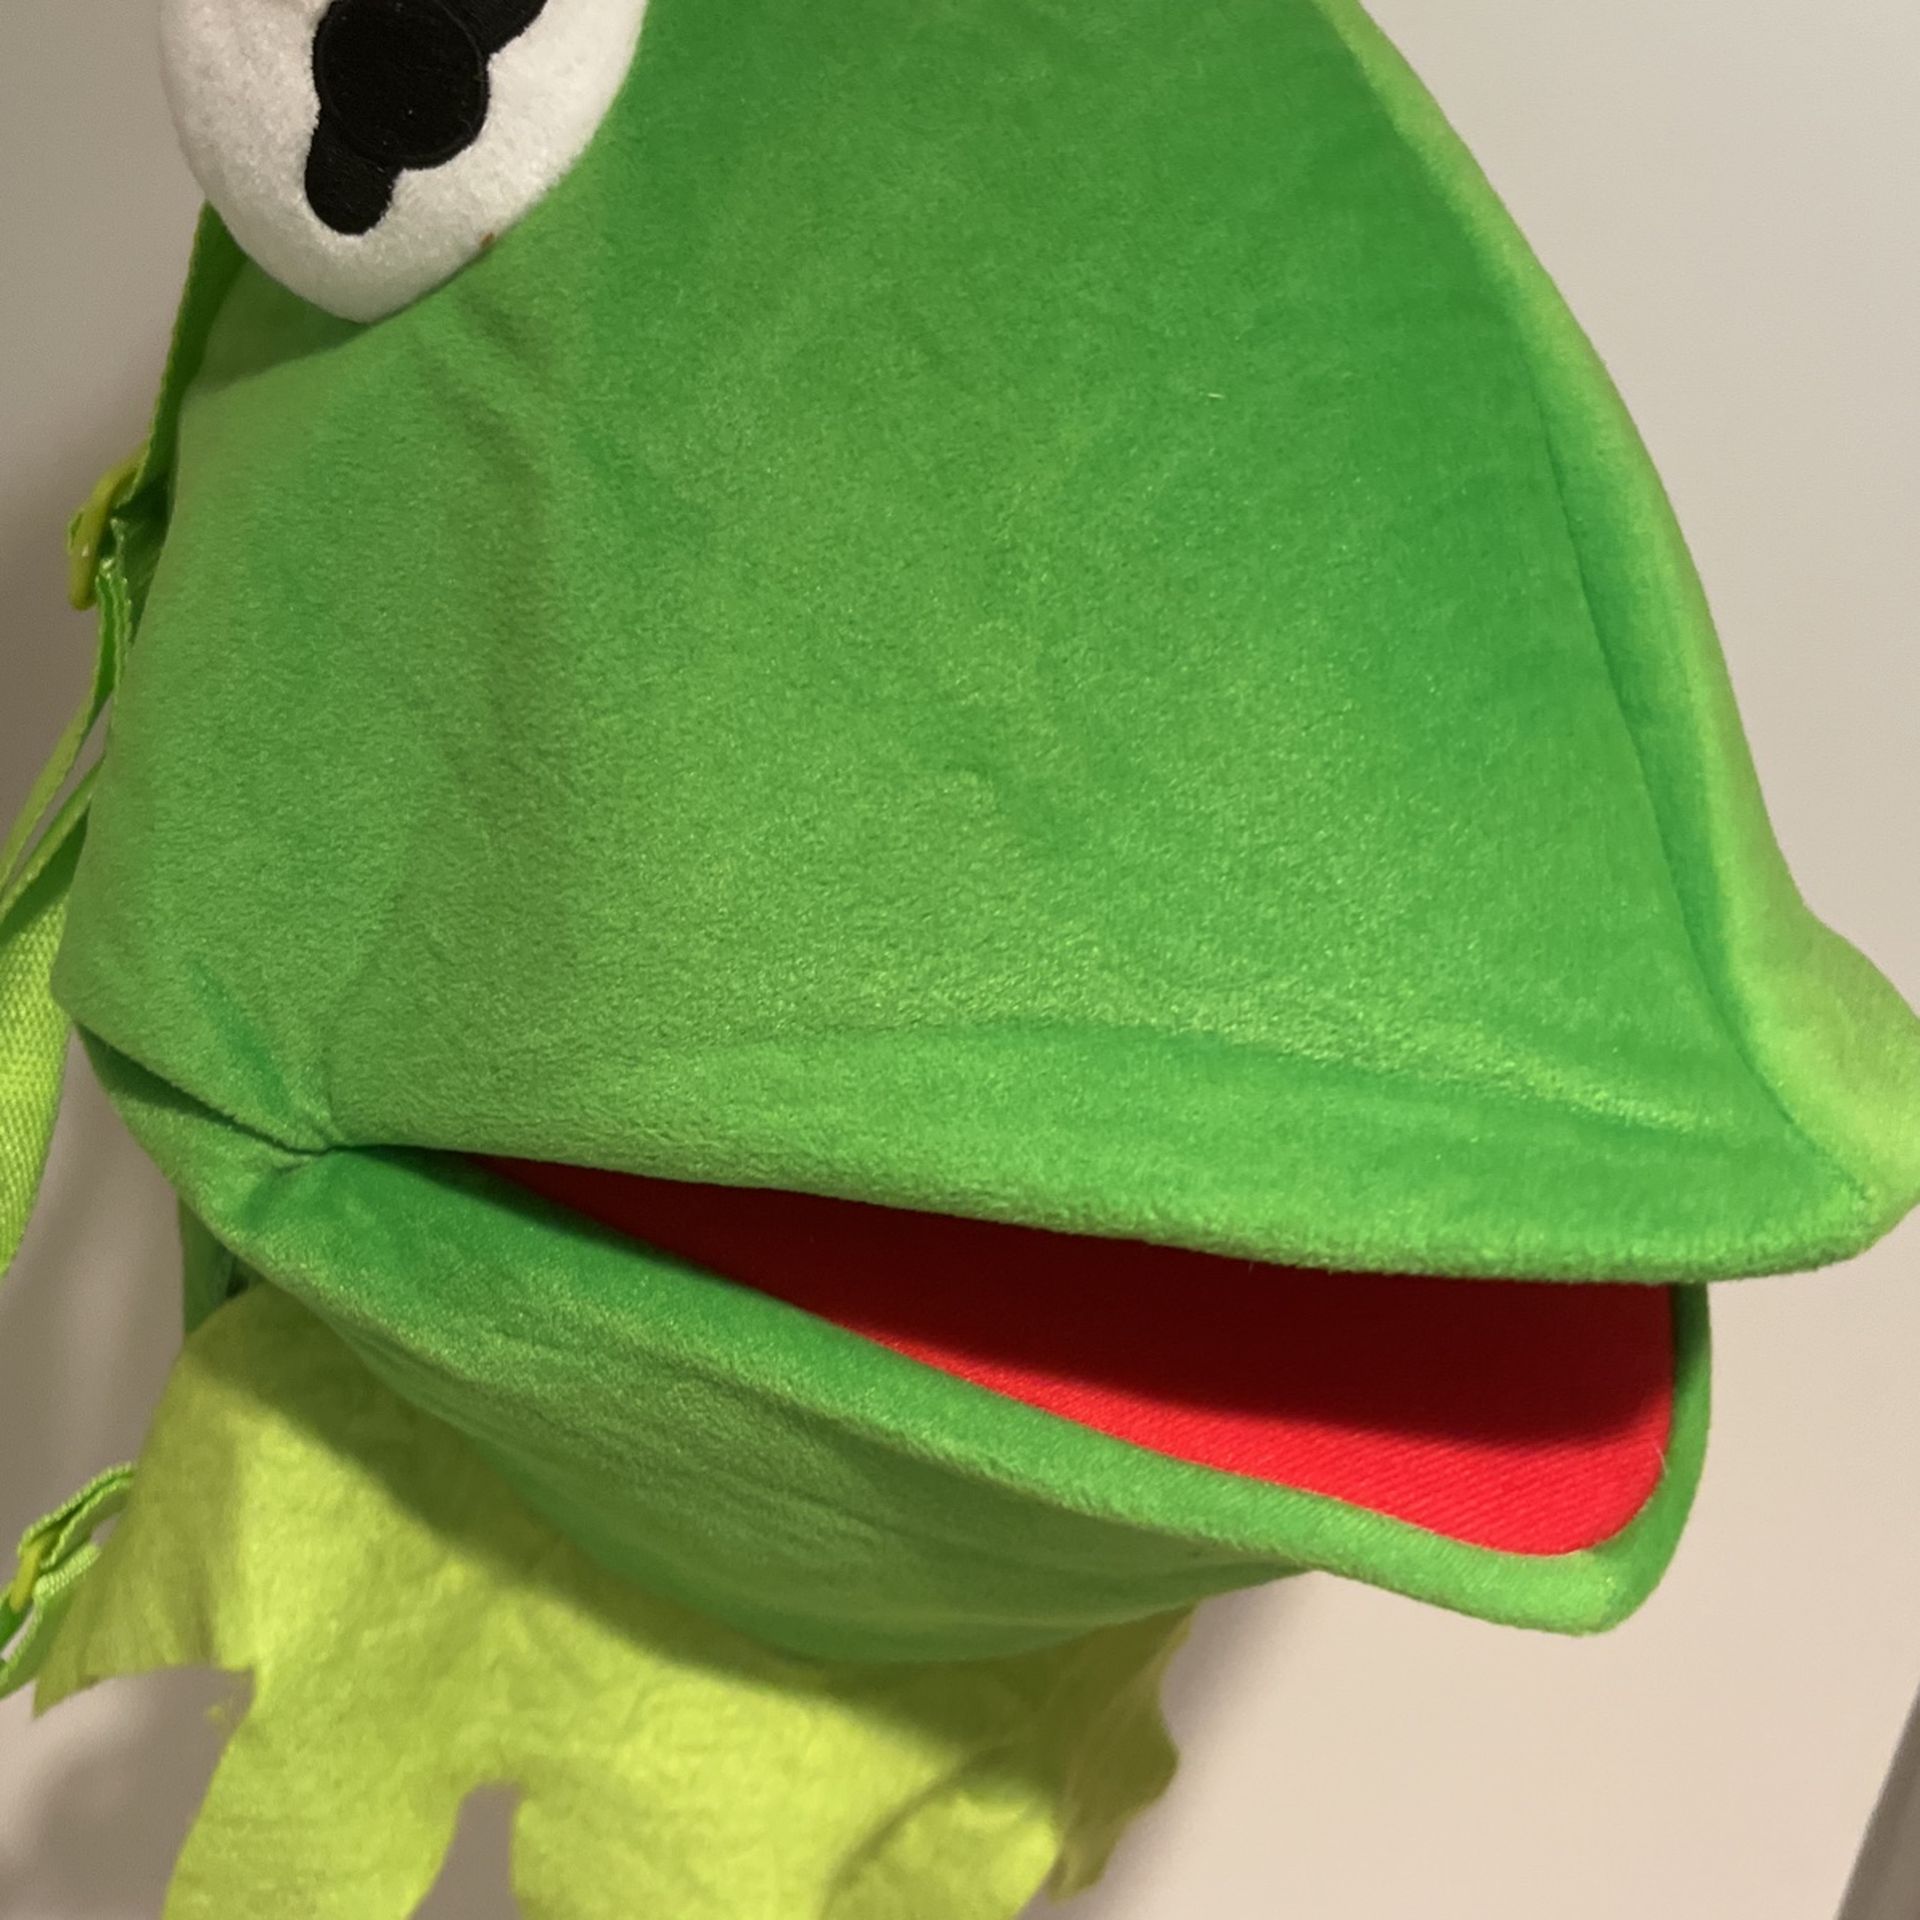 Kermit The Frog  Back-pack